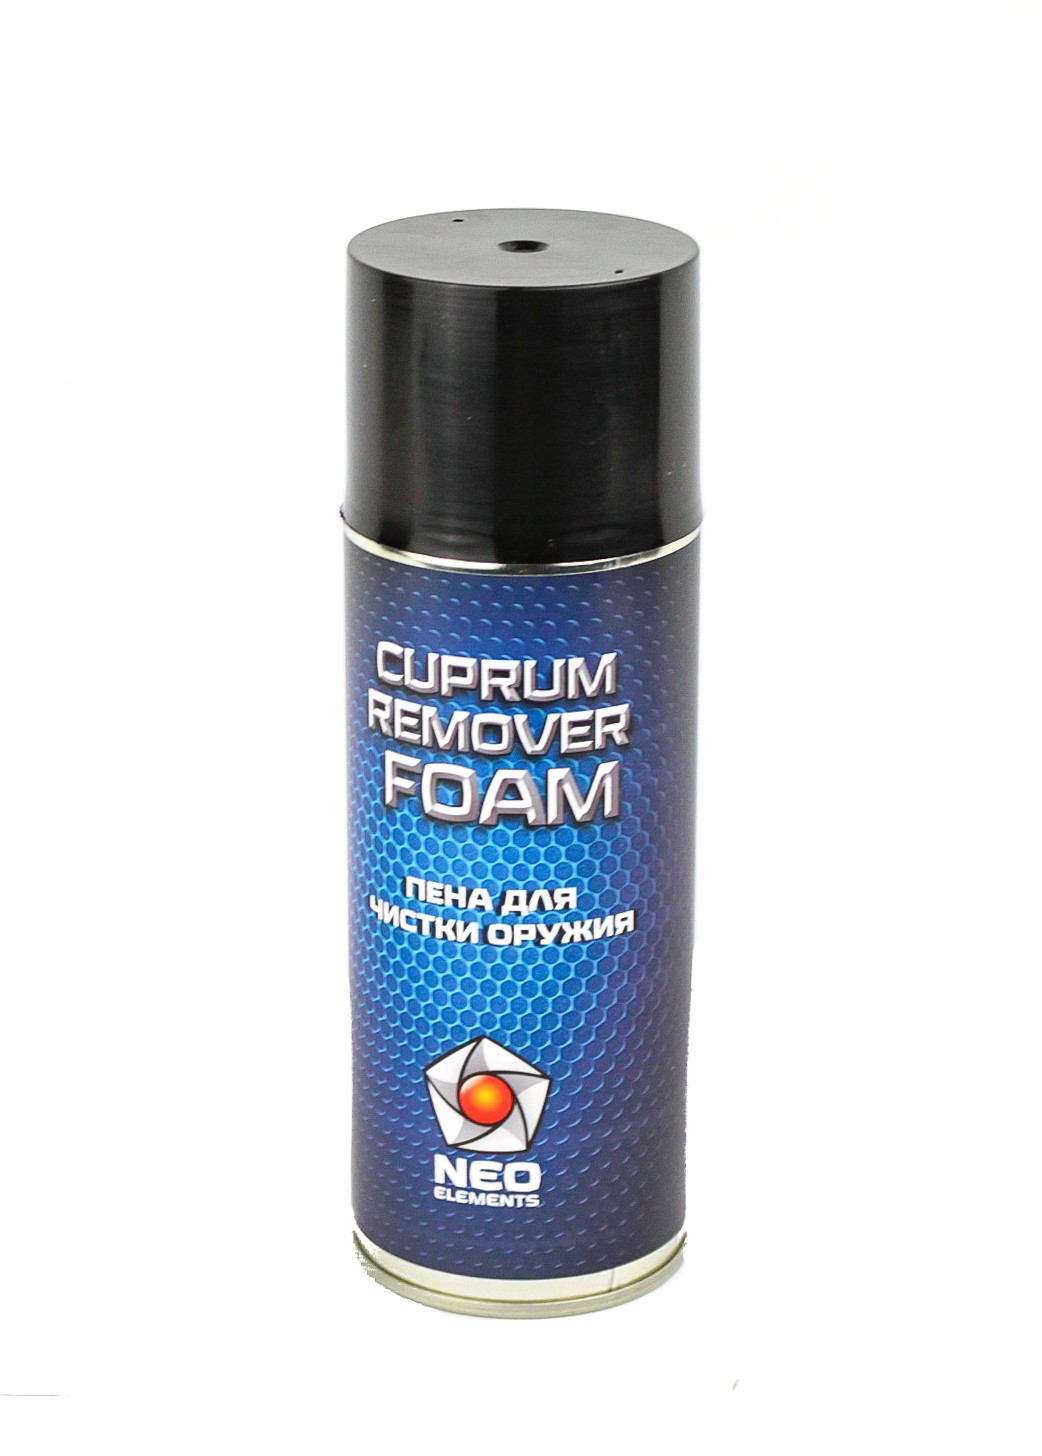 Пена Neo Elements Cuprum Remover Foam для чистки оружия 520мл - фото 1